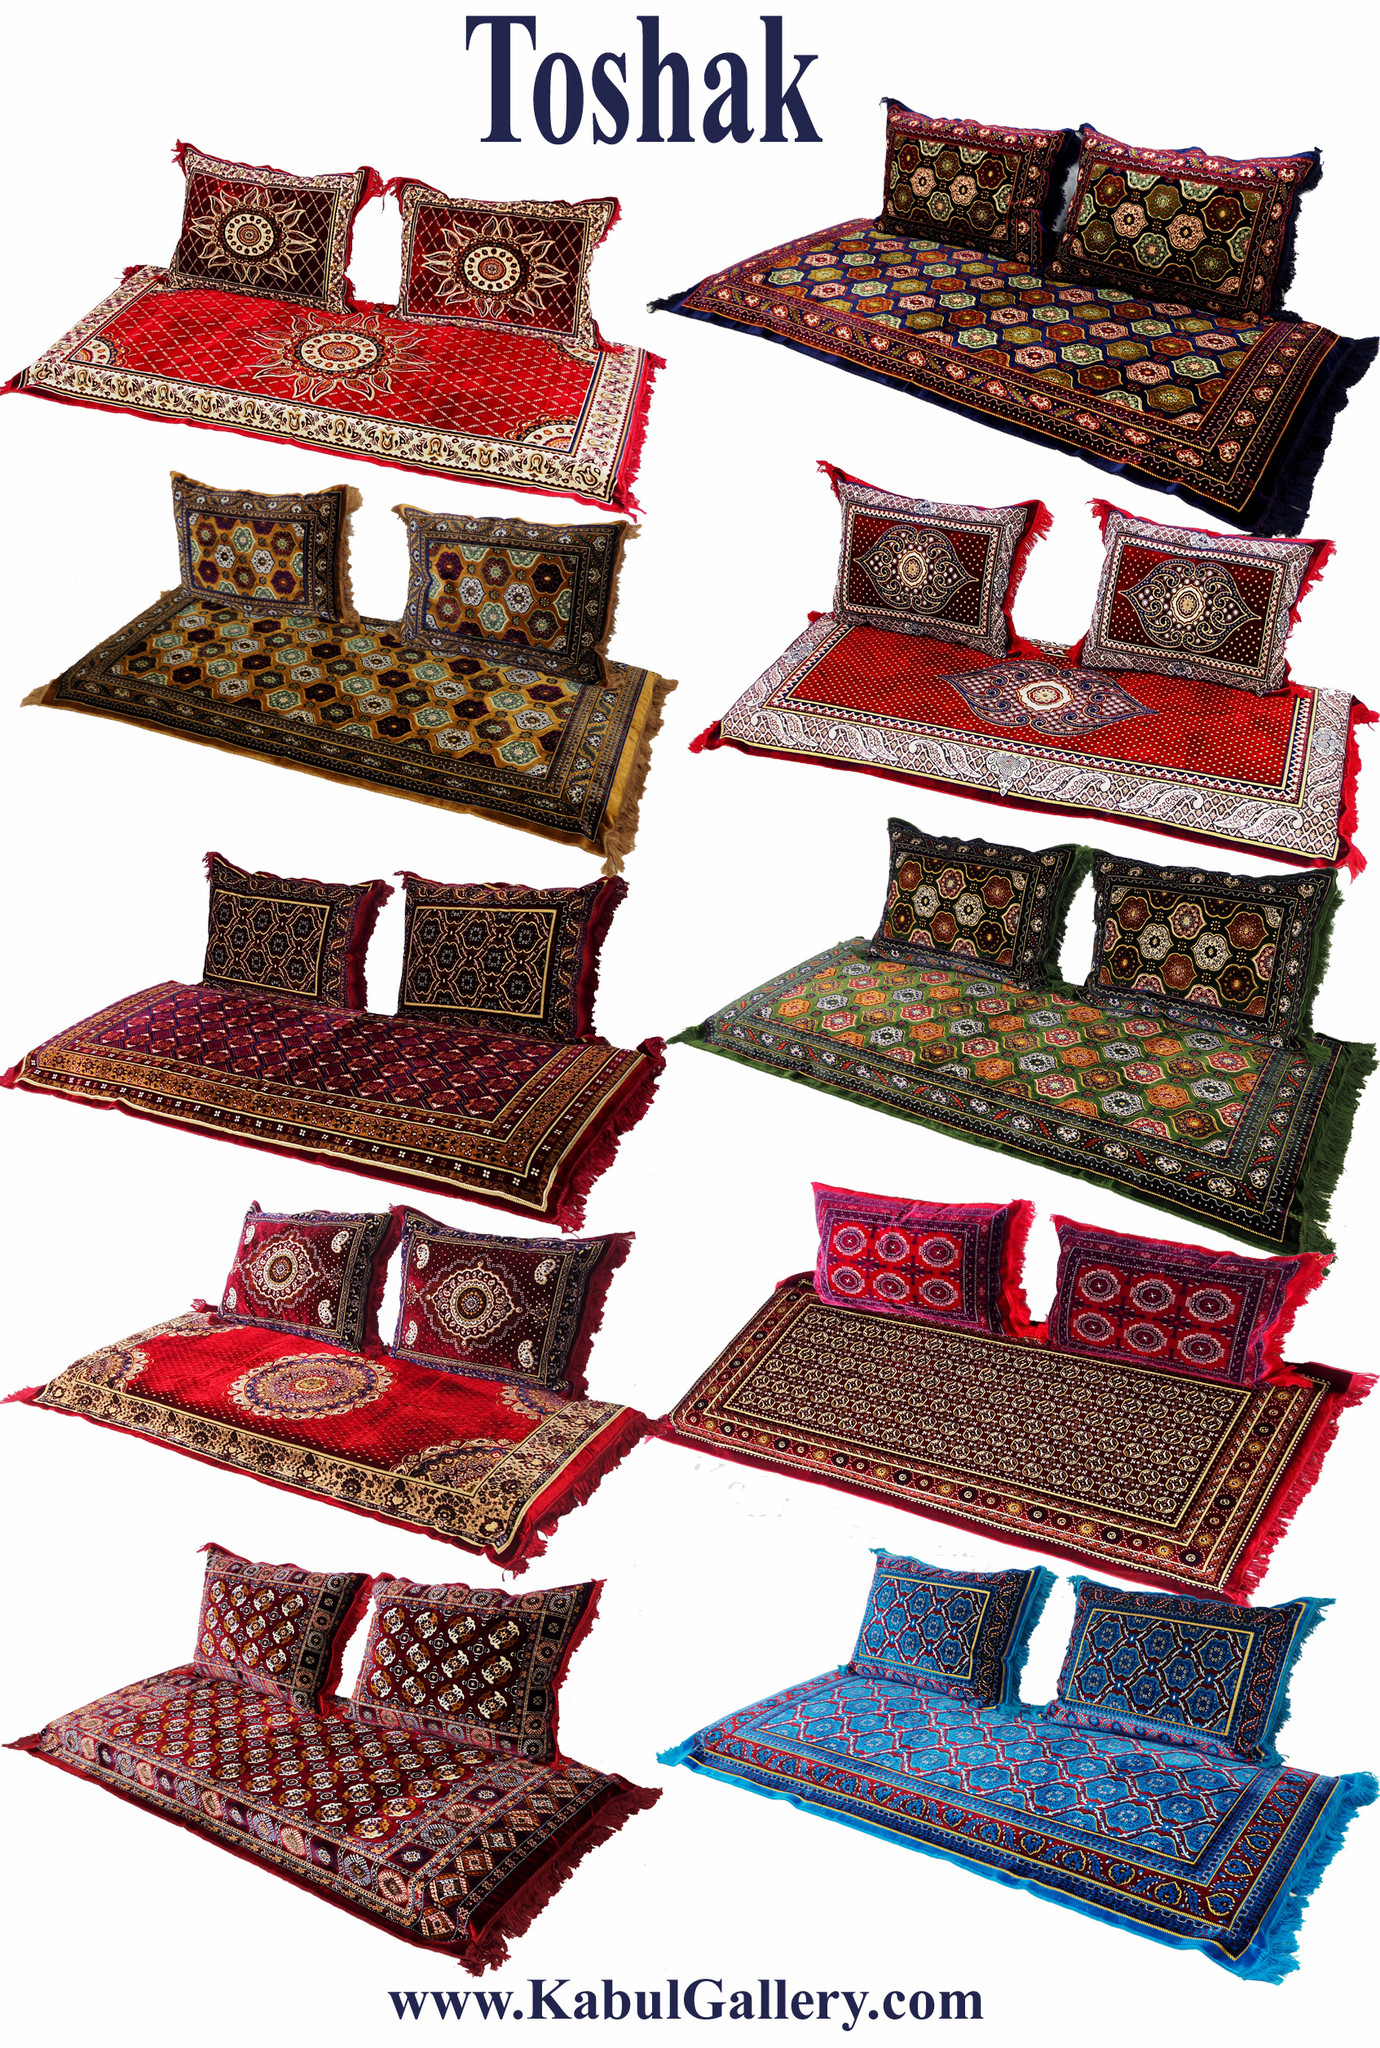 190x75 orient Sitzkissen Matratze Sitzecke Afghan toshak seating mattress (Bukhara) توشک